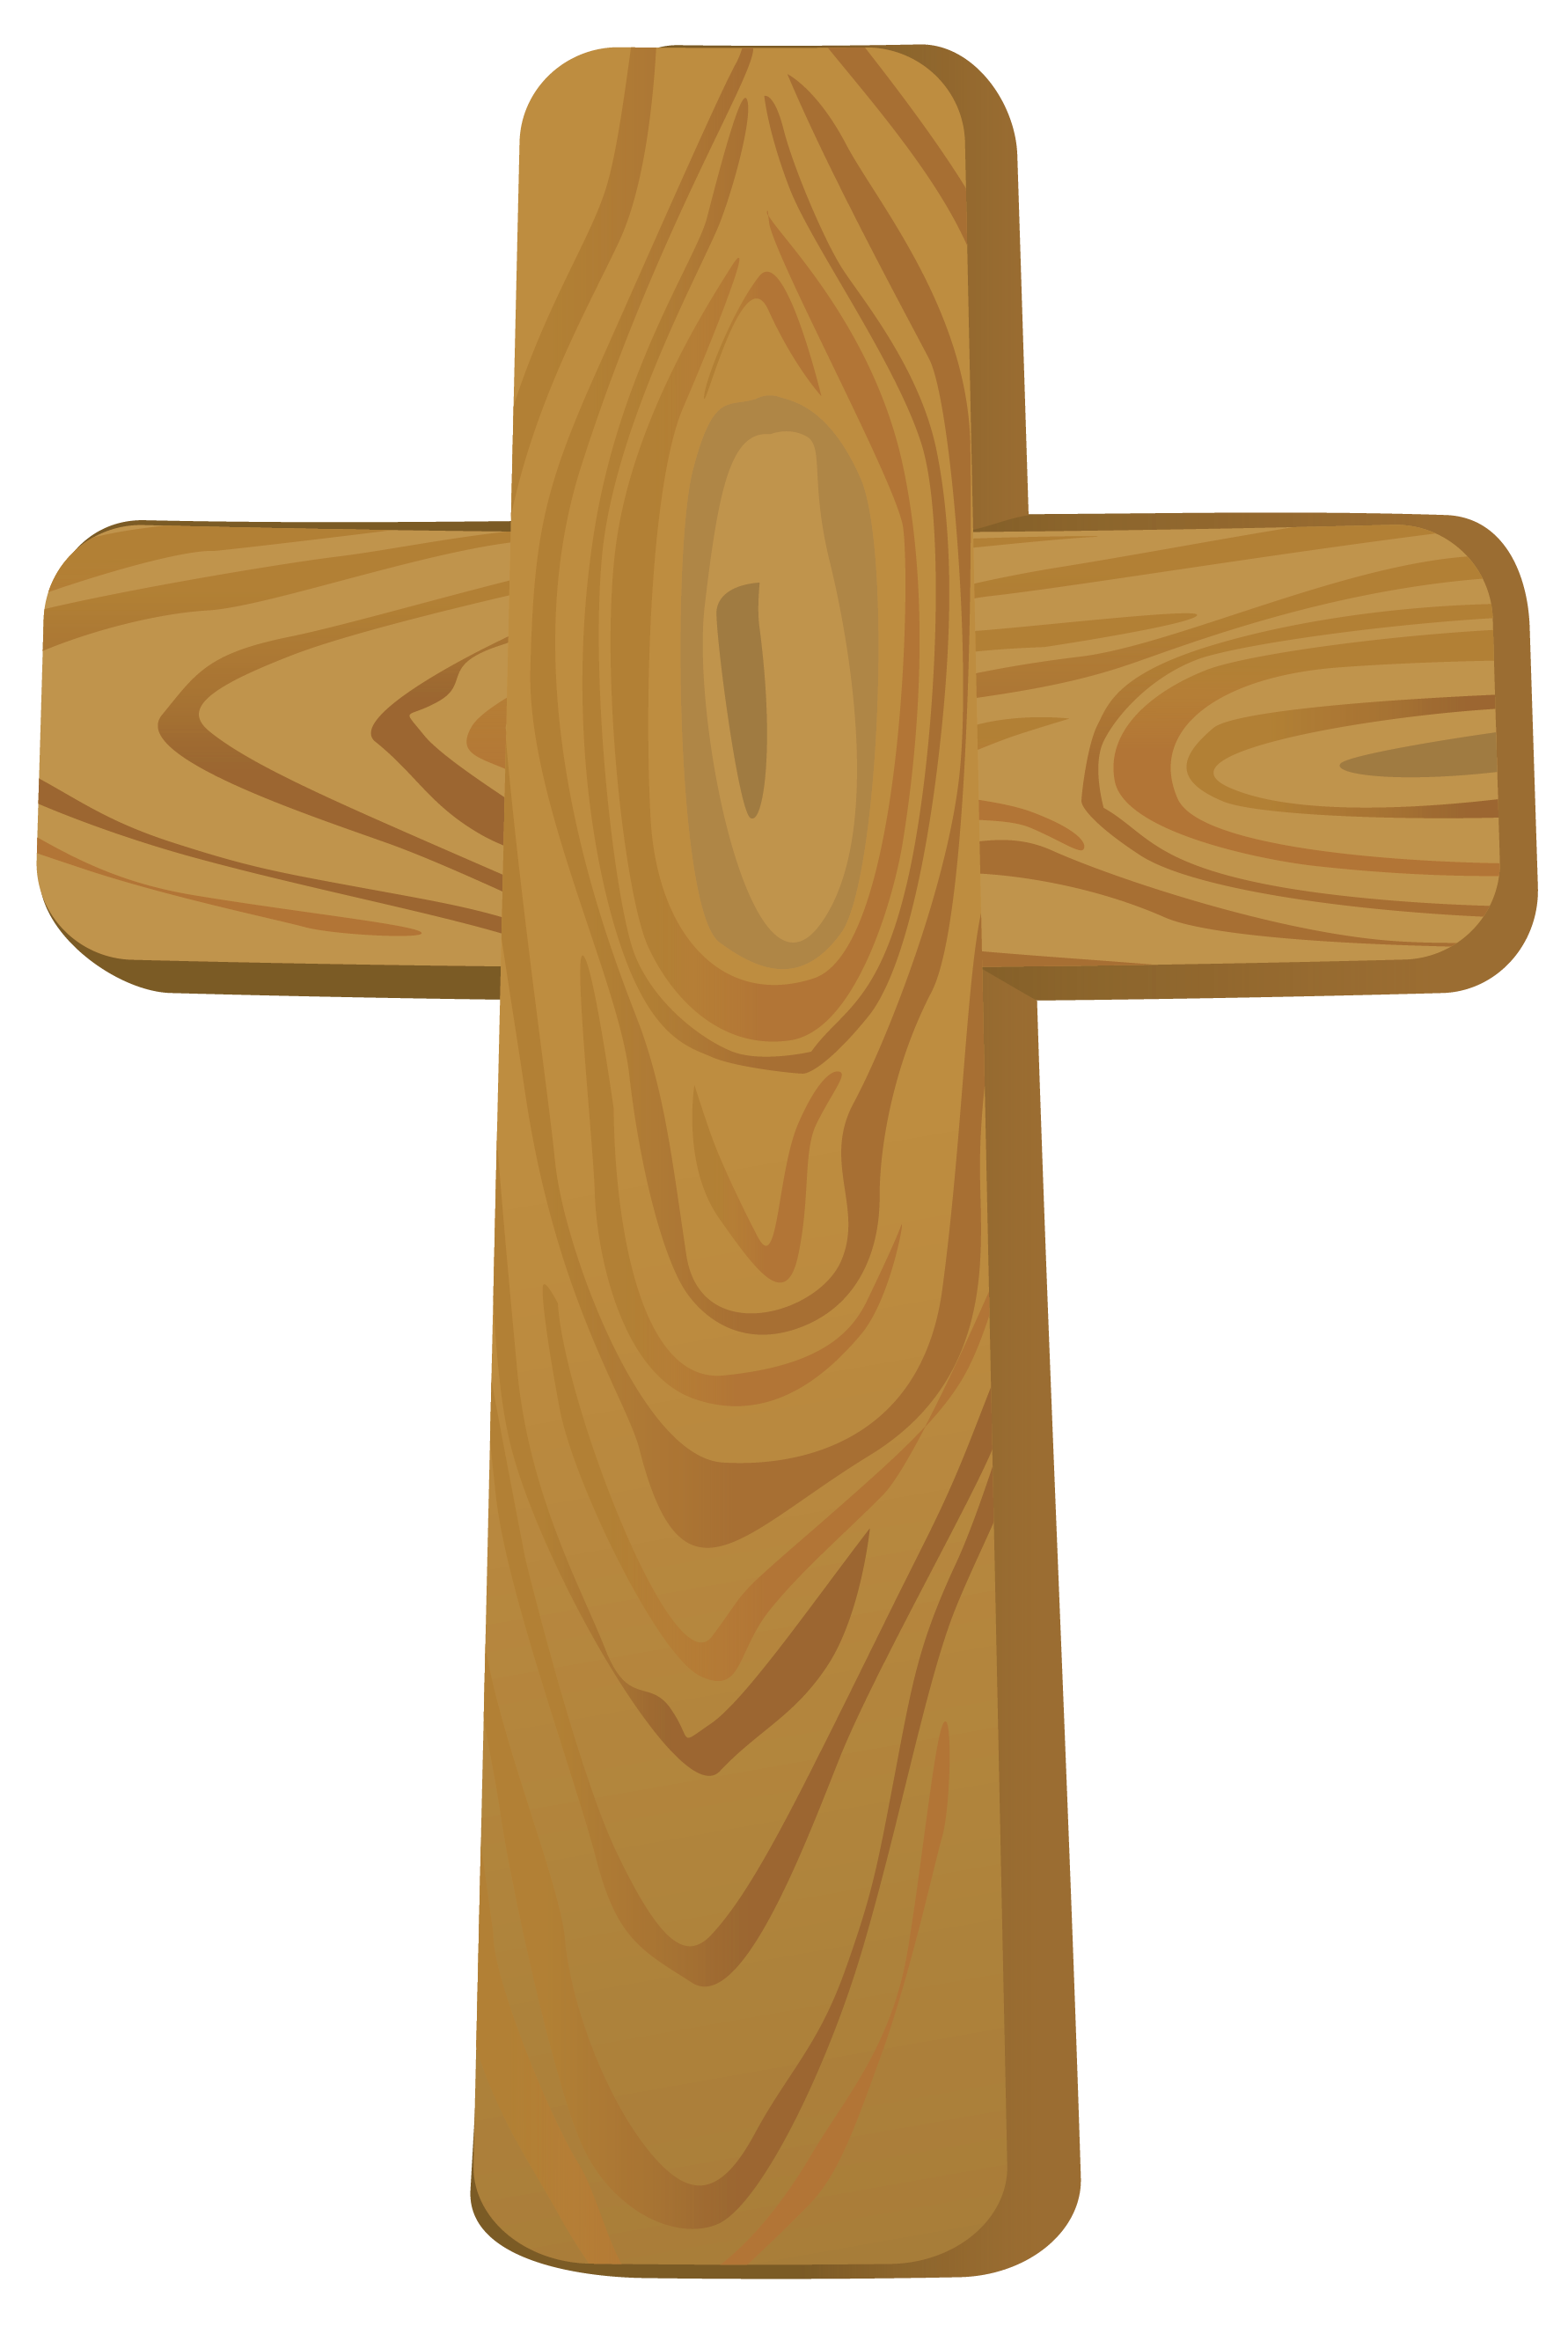 Cross clipart. Wood 